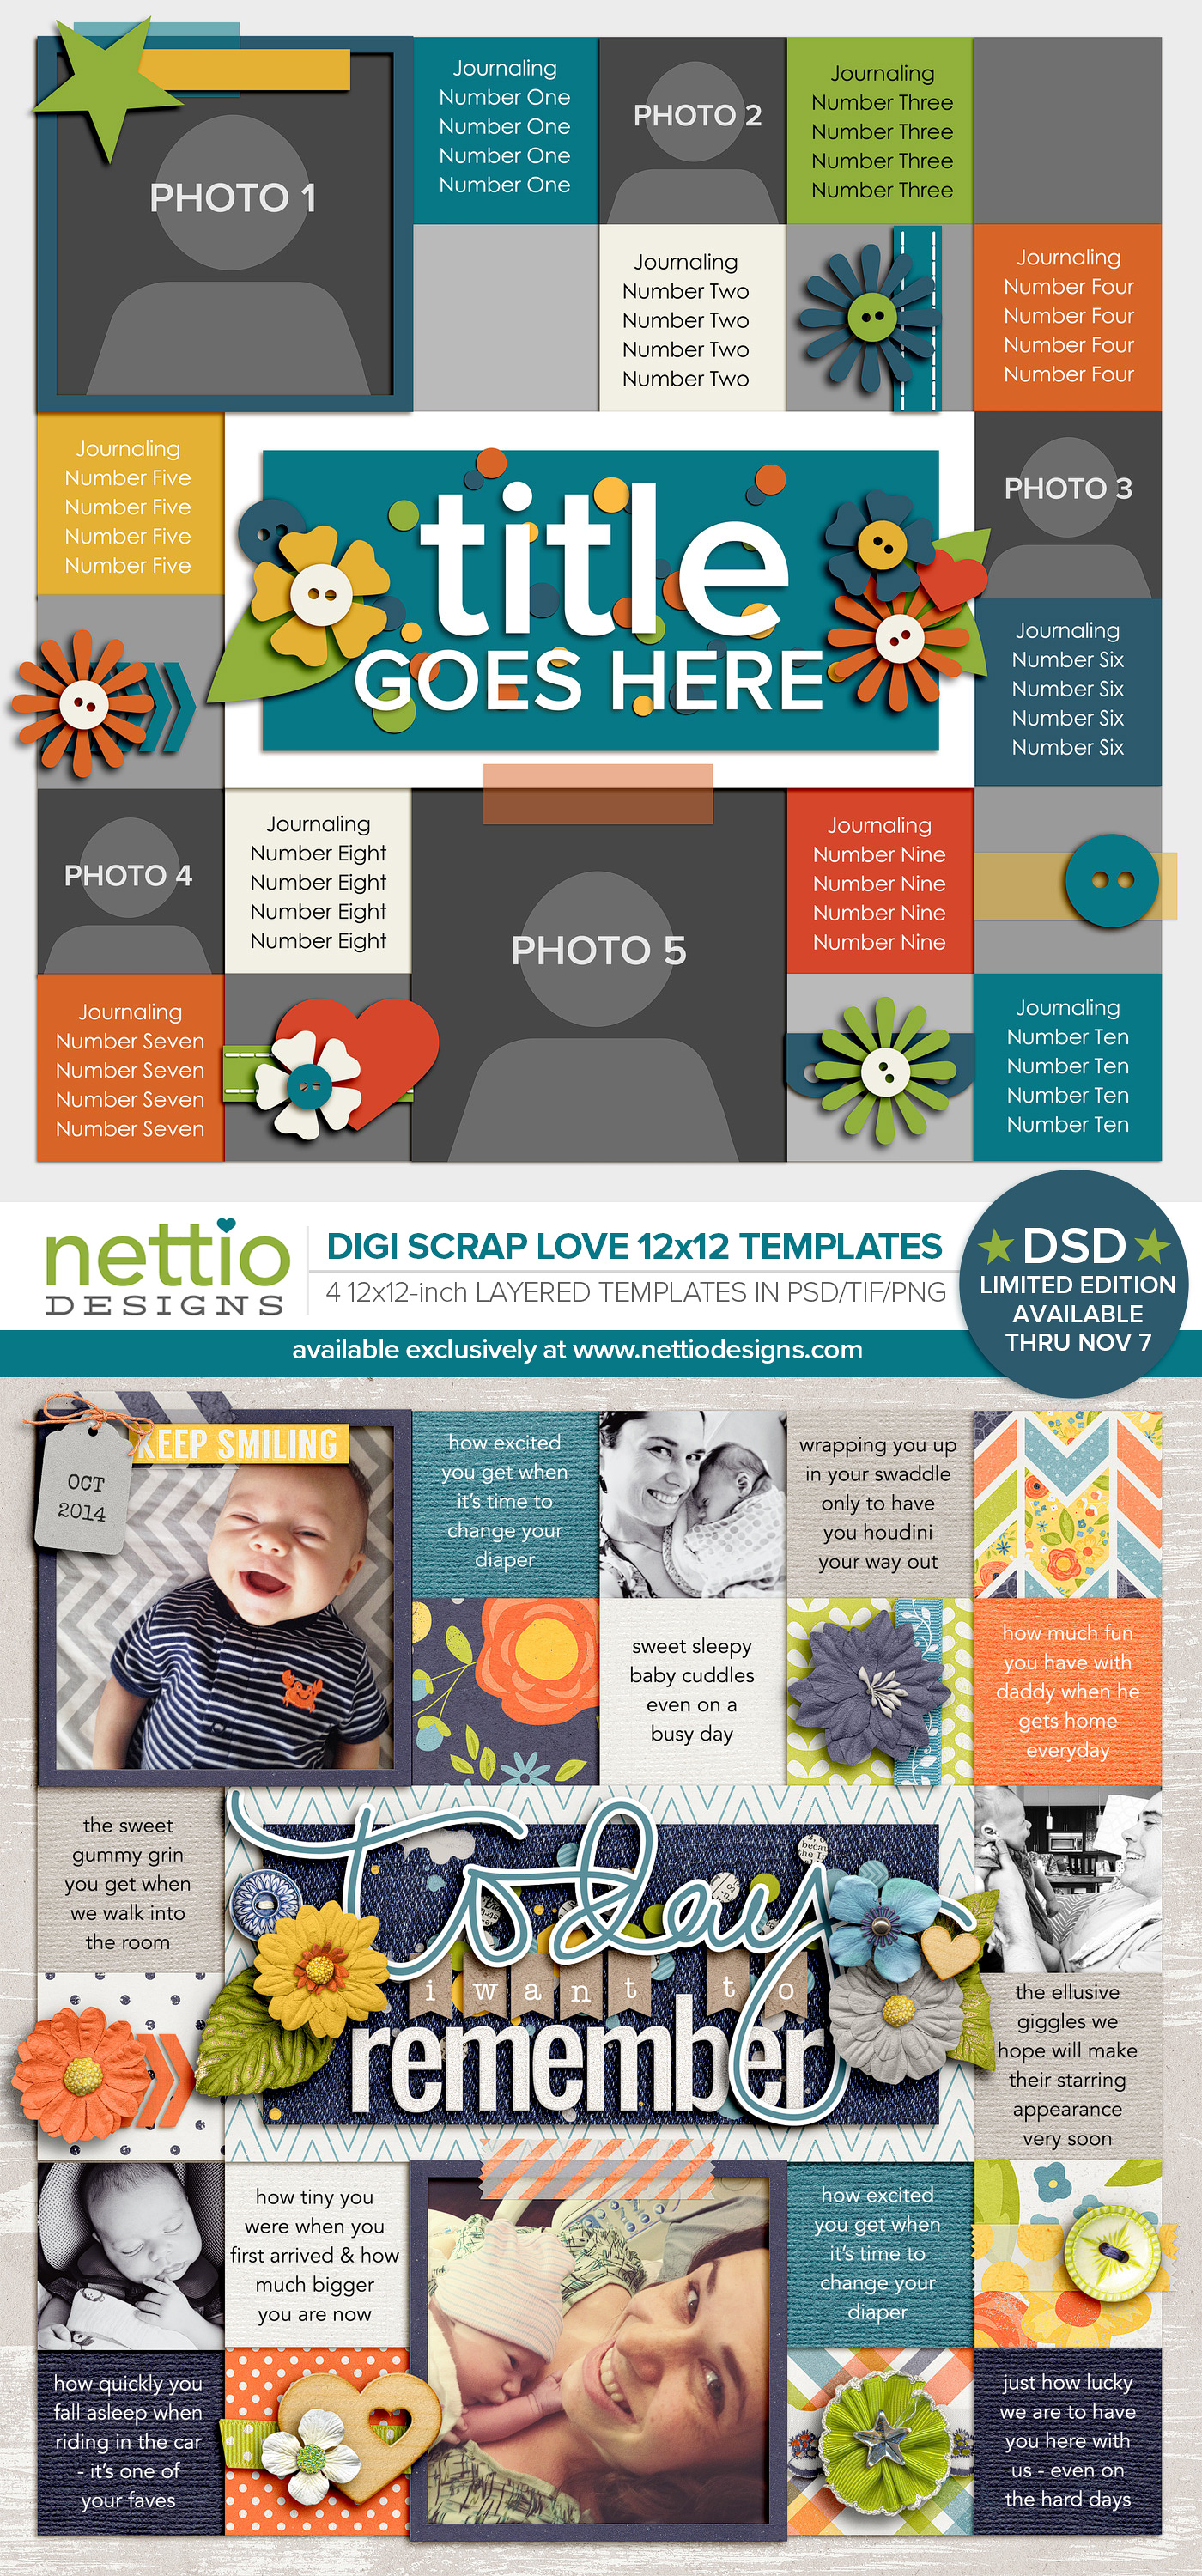 nettio designs digital scrapbooking template layout 4